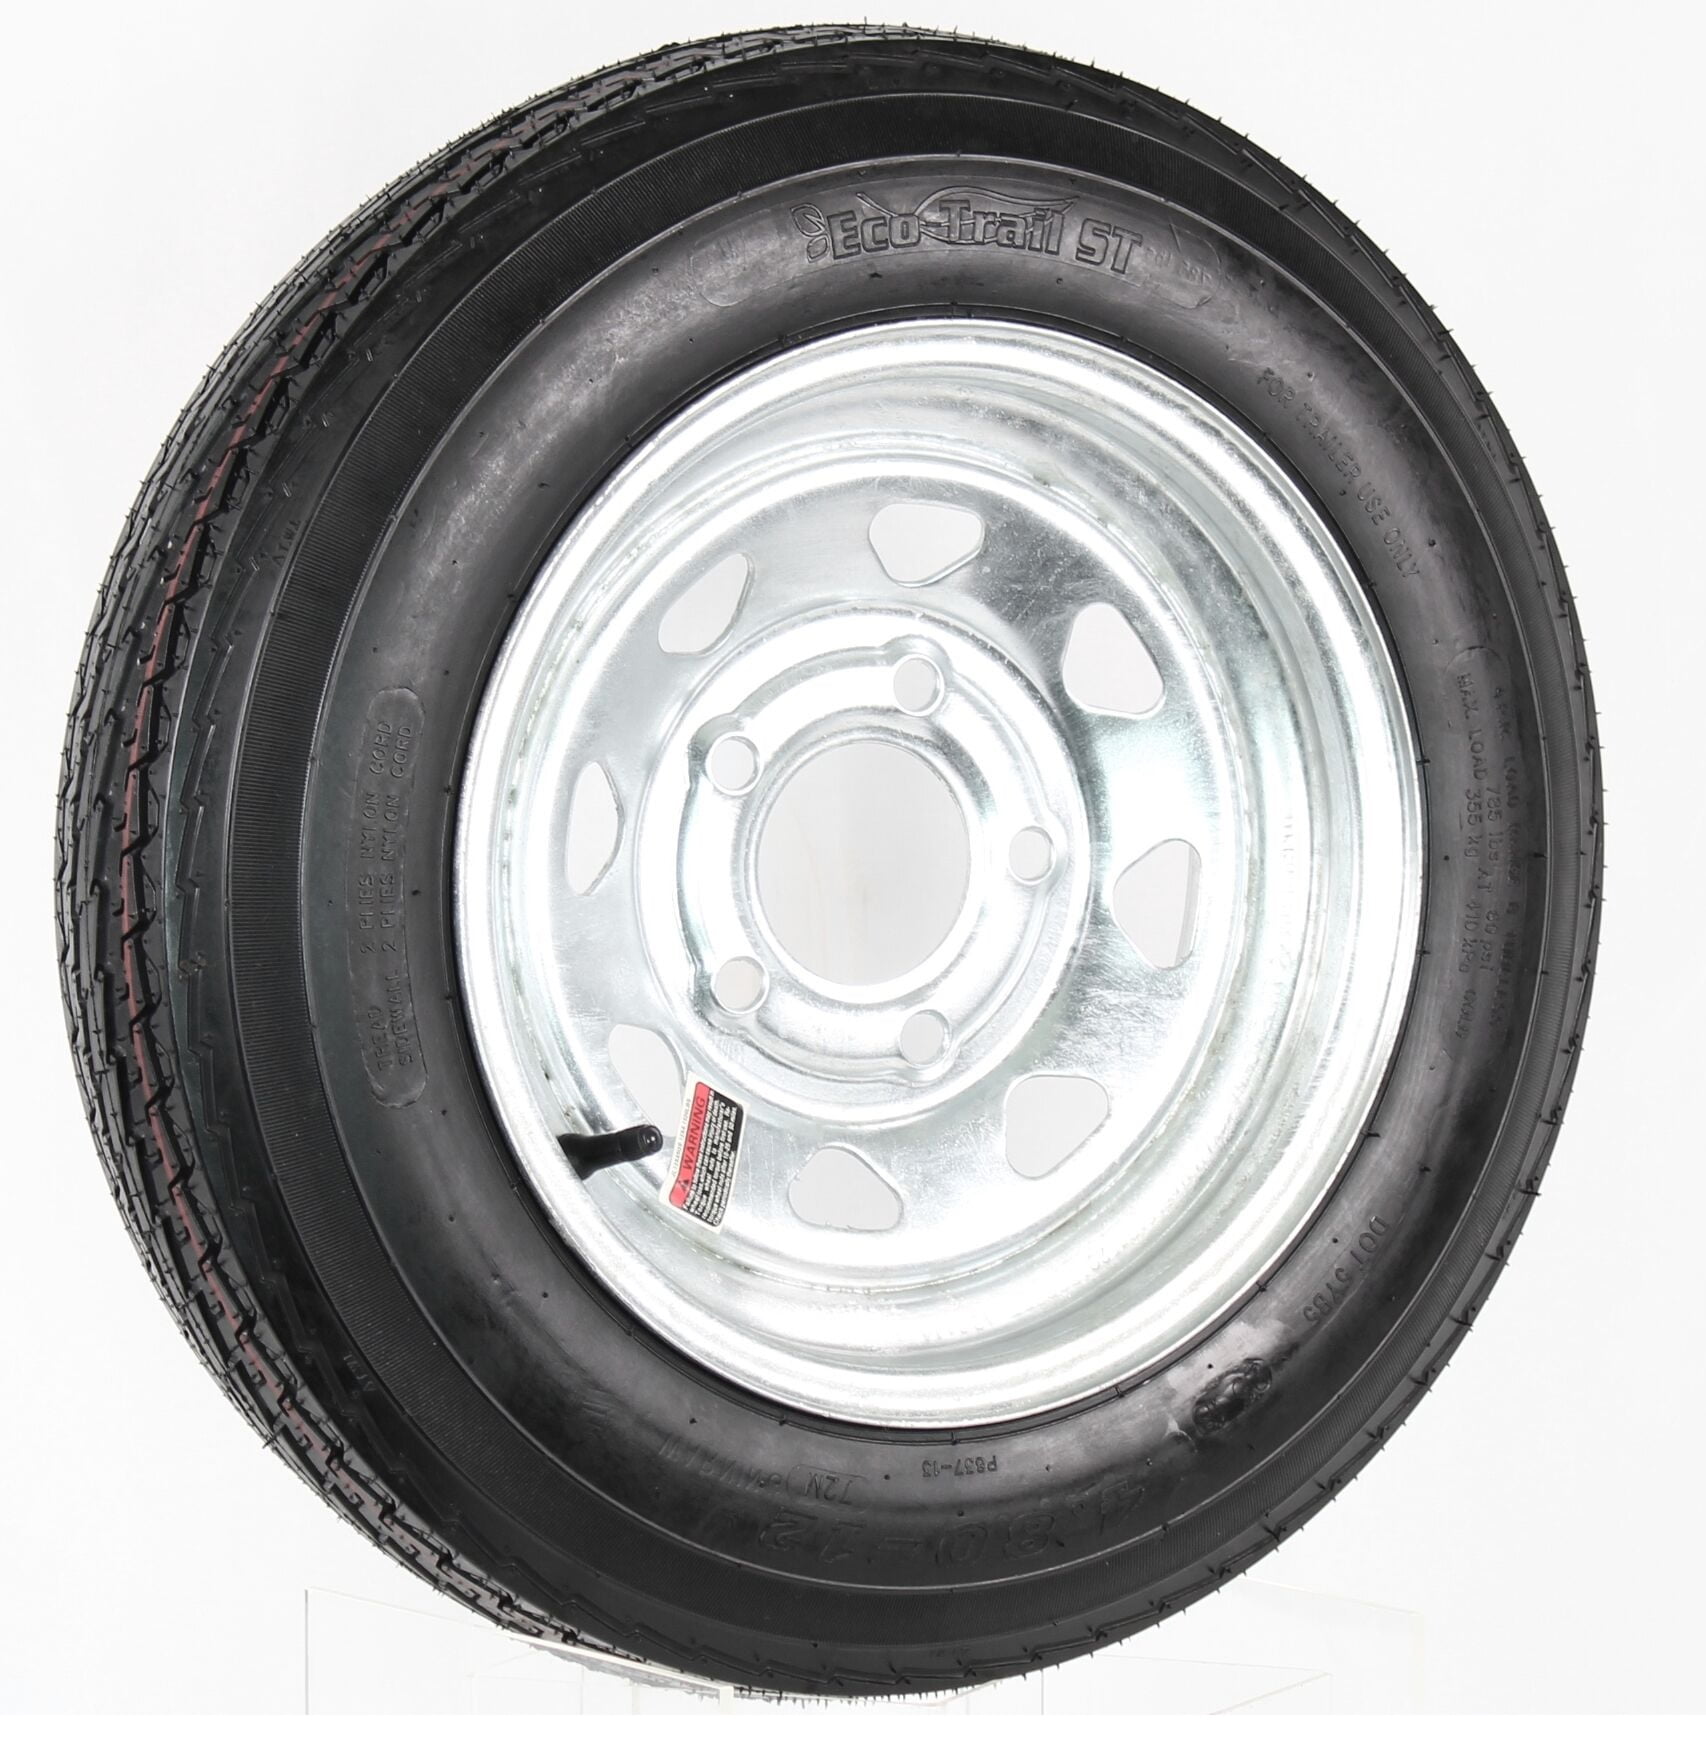 MOTOOS Trailer Tire 4.80 x 12 with Rim 5 Lug 2-Pack Trailer Tire of Wheel 4.80-12 Load B 5 Lug 480 x 12 White Rim 4PLY Trailer on 4.5 Center Tire Tubeless 